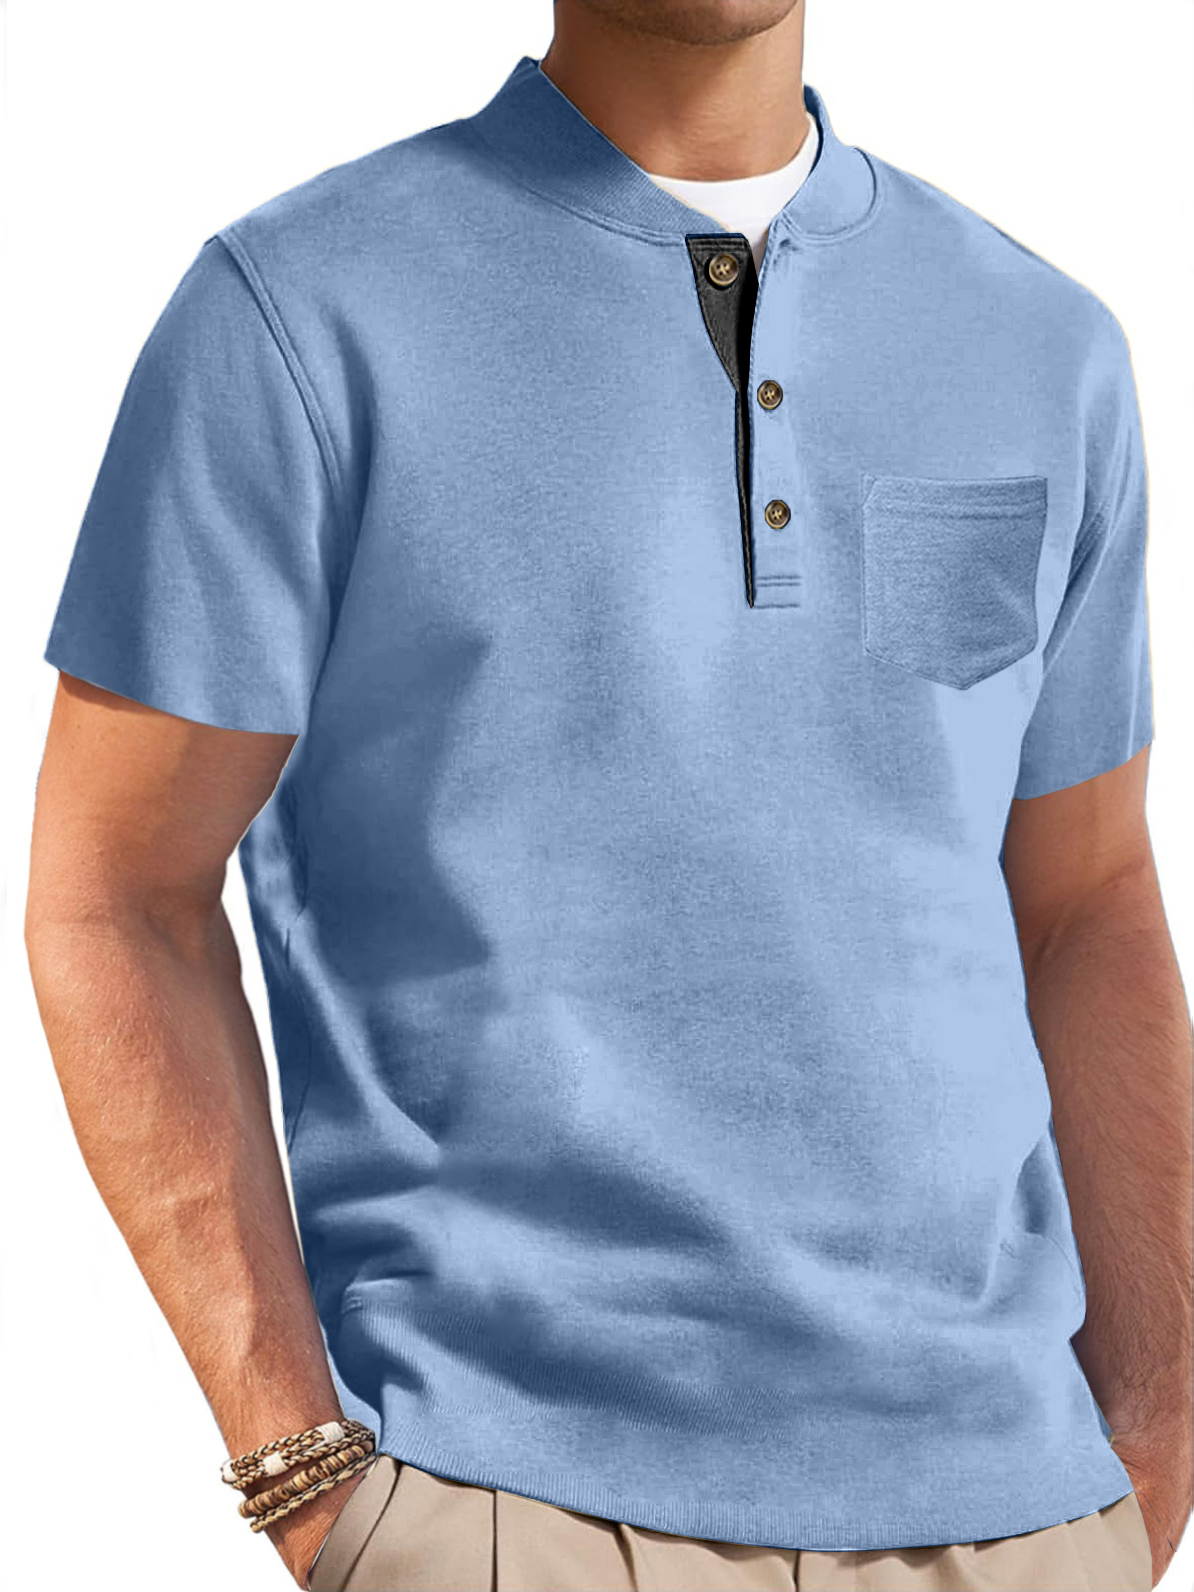 Men's Color Cotton Pocket Stretch Basics Simple Round Neck Henley Short Sleeve Top